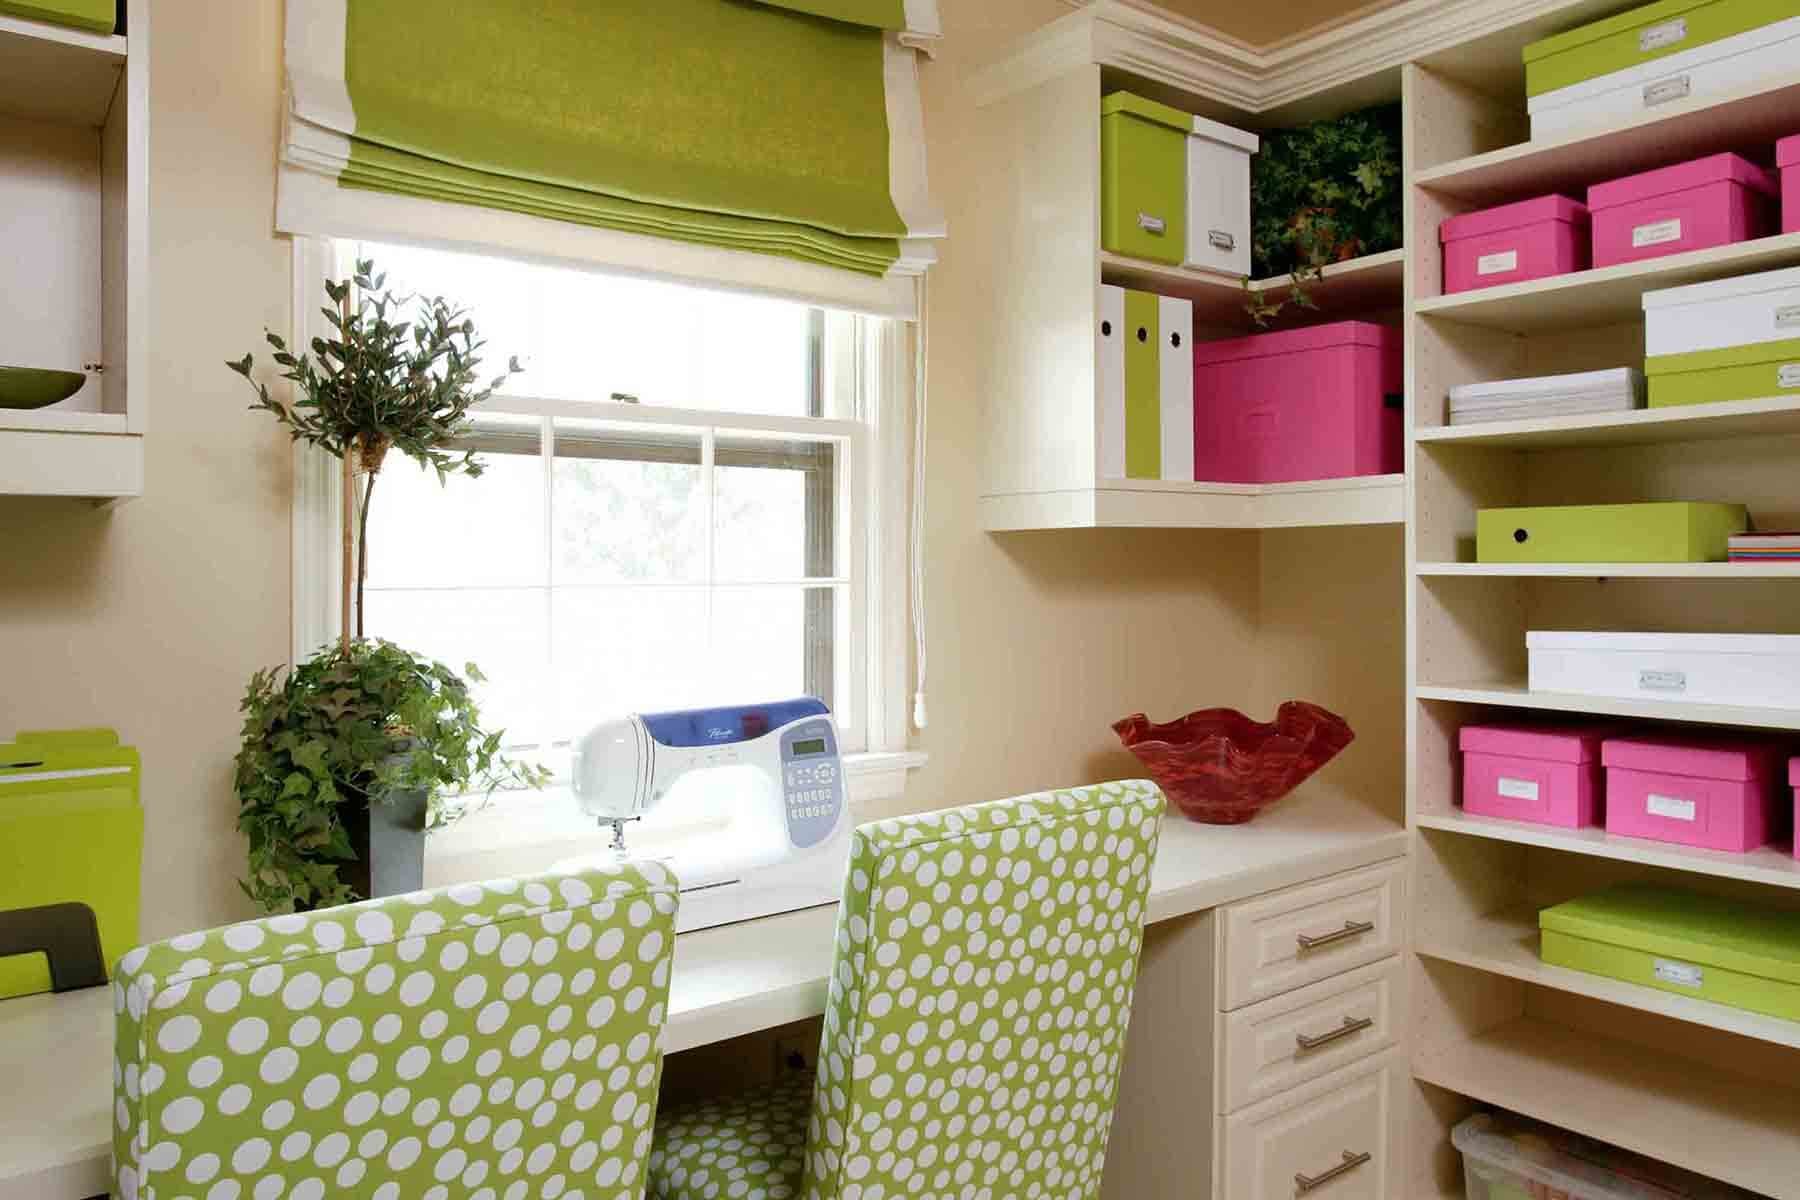 Craft Room Organization - Style + Dwell